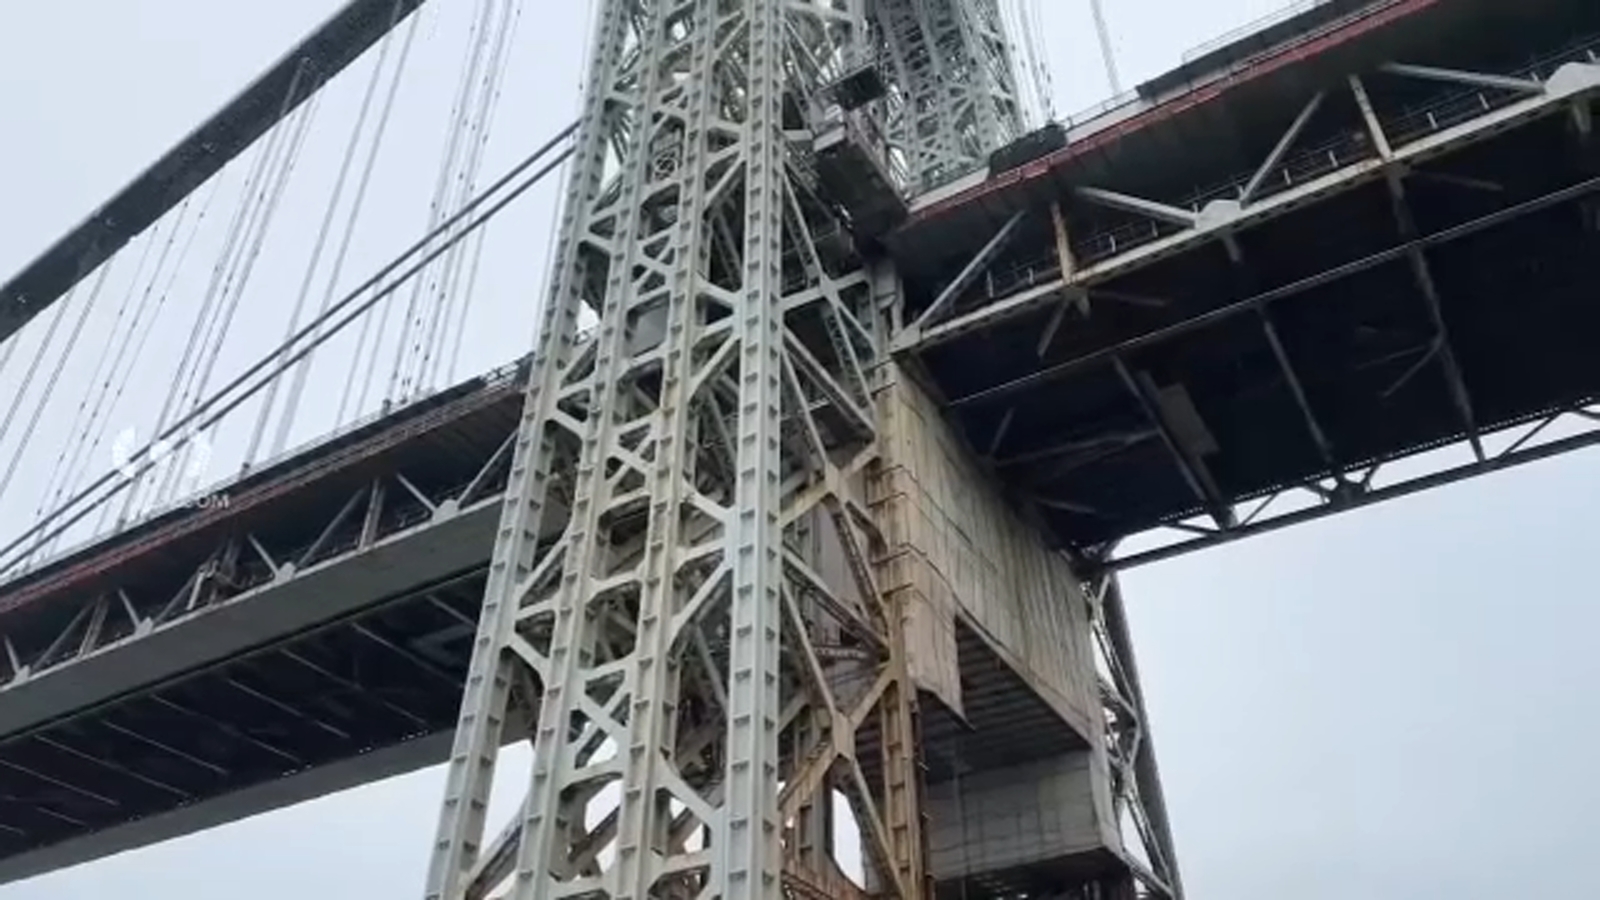 George Washington Bridge: Man climbing bridge surrenders to police [Video]